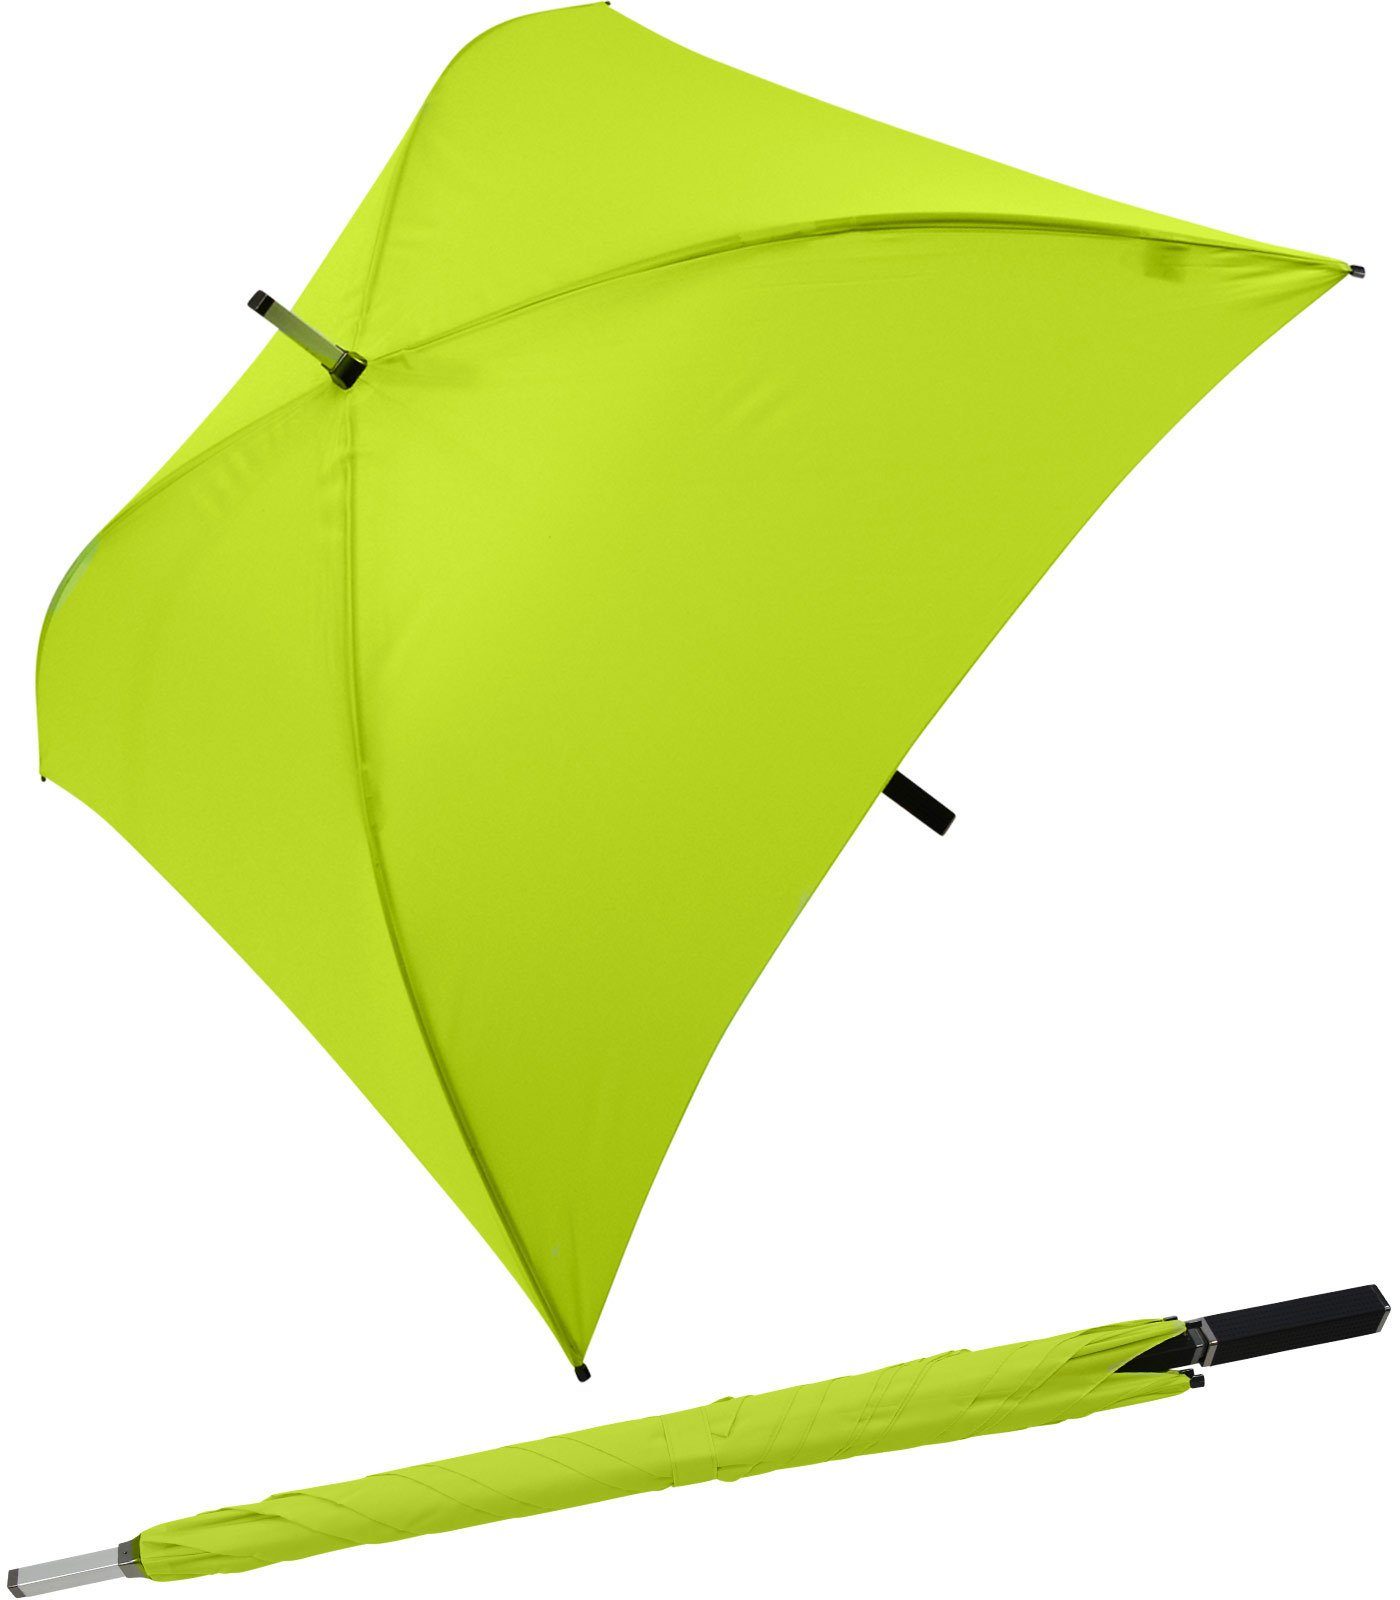 Impliva Langregenschirm All Square® besondere der Regenschirm hellgrün Regenschirm, ganz voll quadratischer